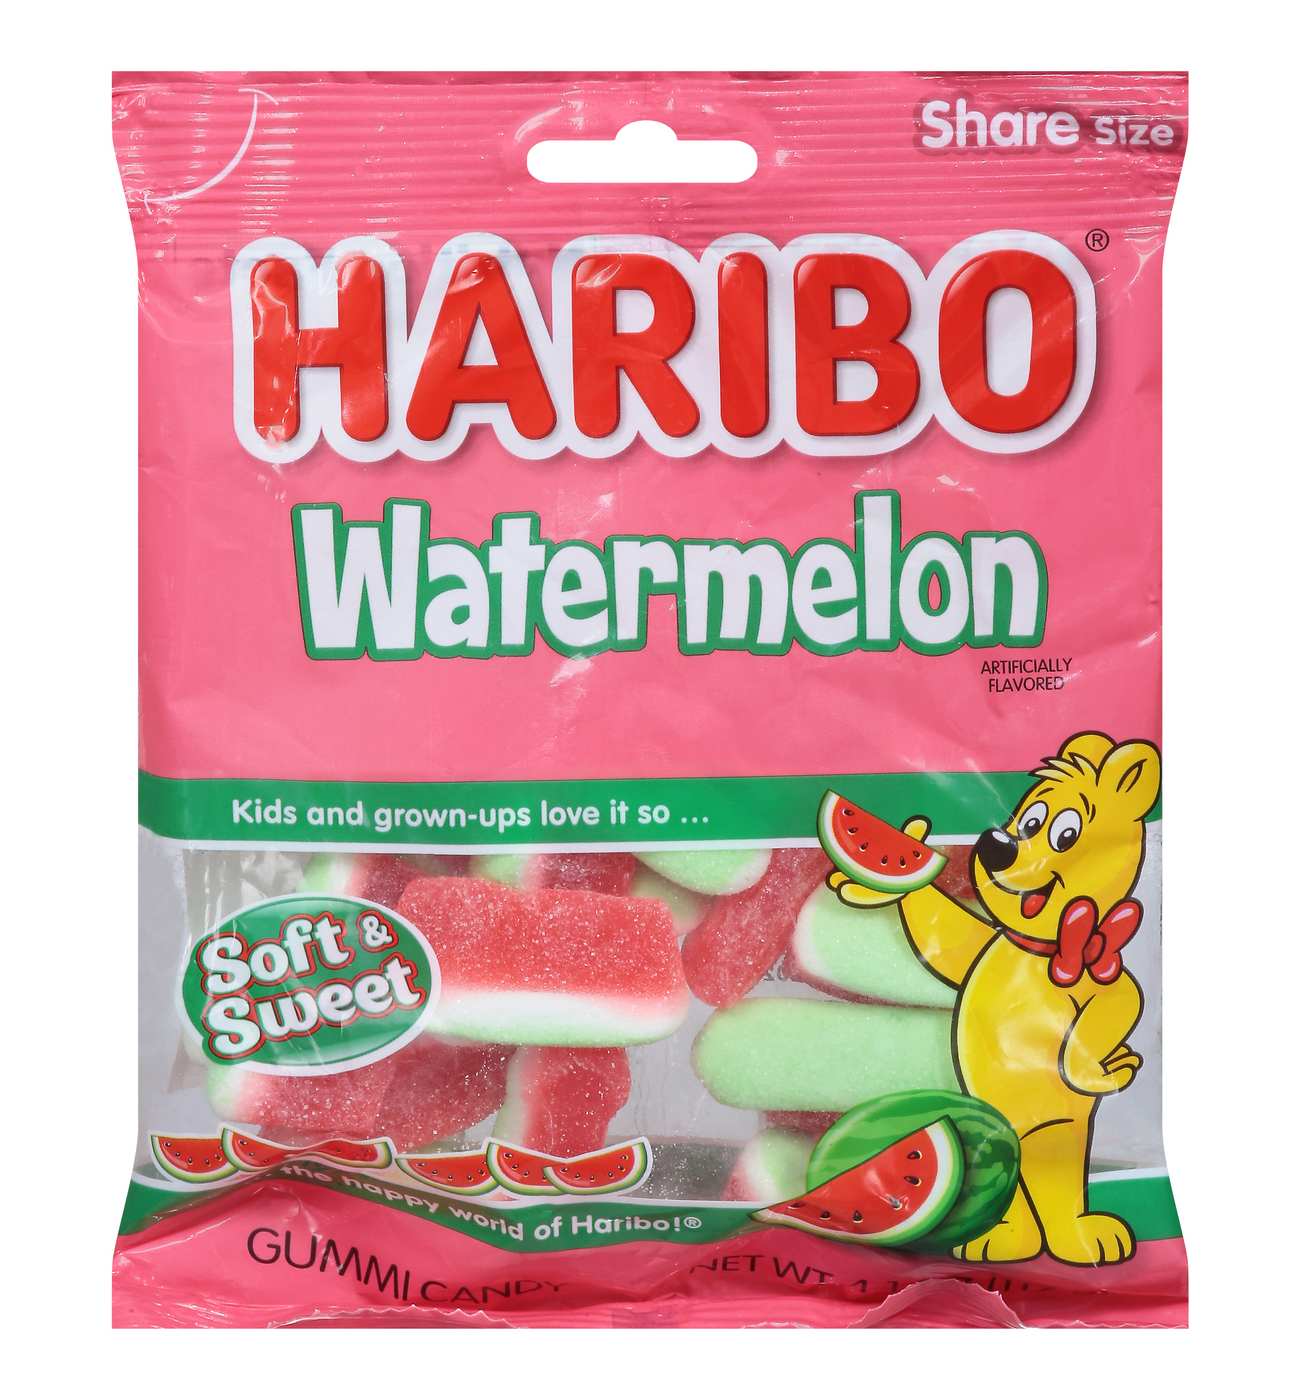 Haribo Watermelon Flavor Gummi Candy; image 1 of 2